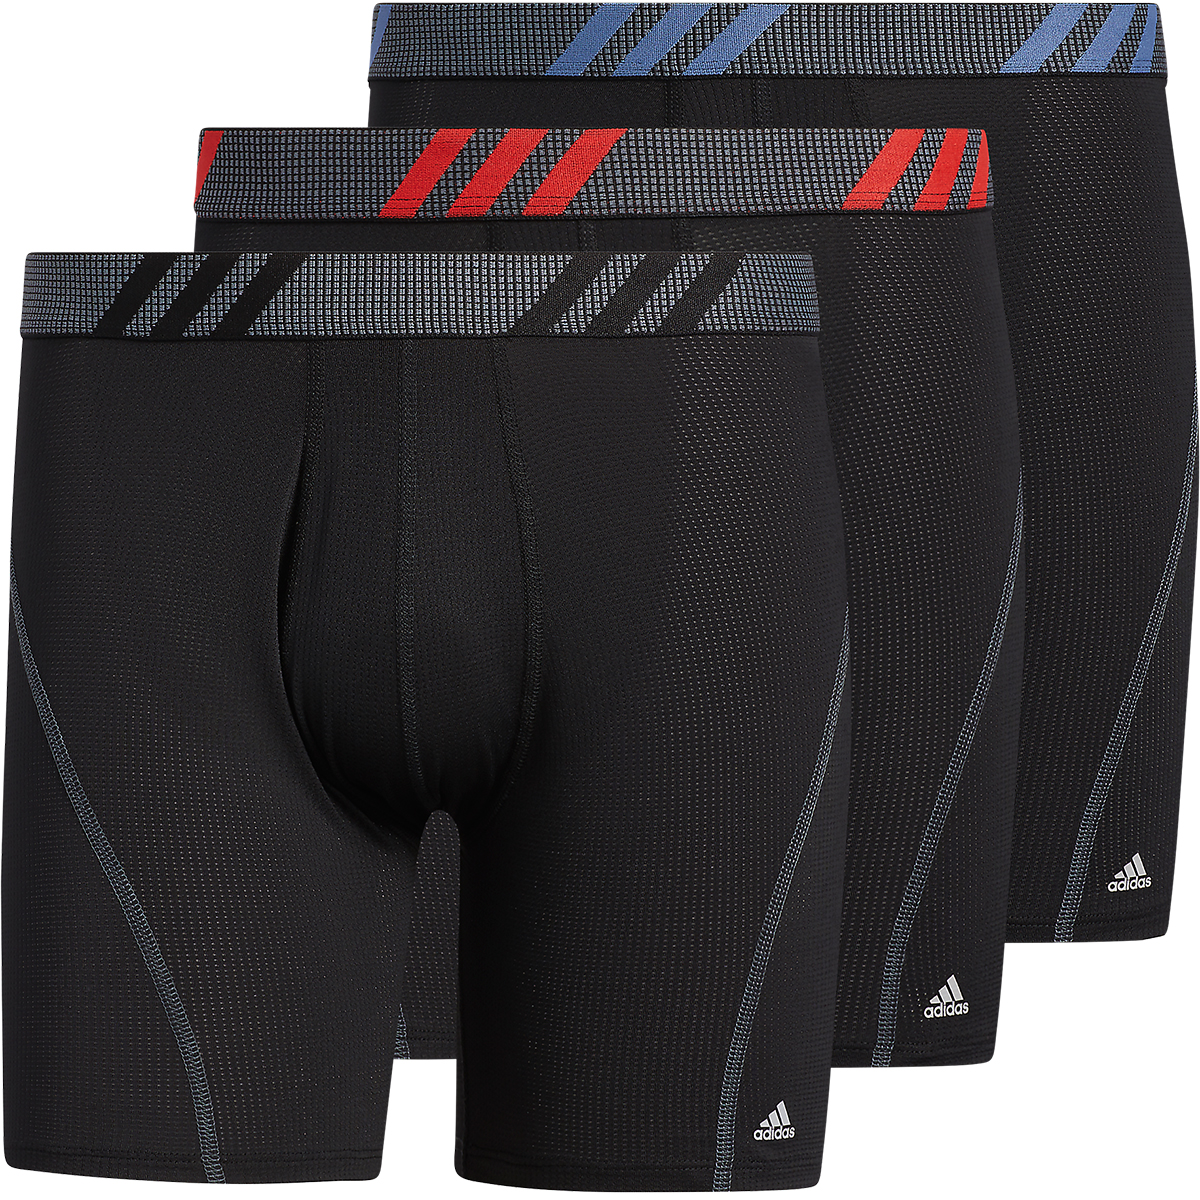 Adidas Men's Sport Performance Boxer Briefs, 3 Pack